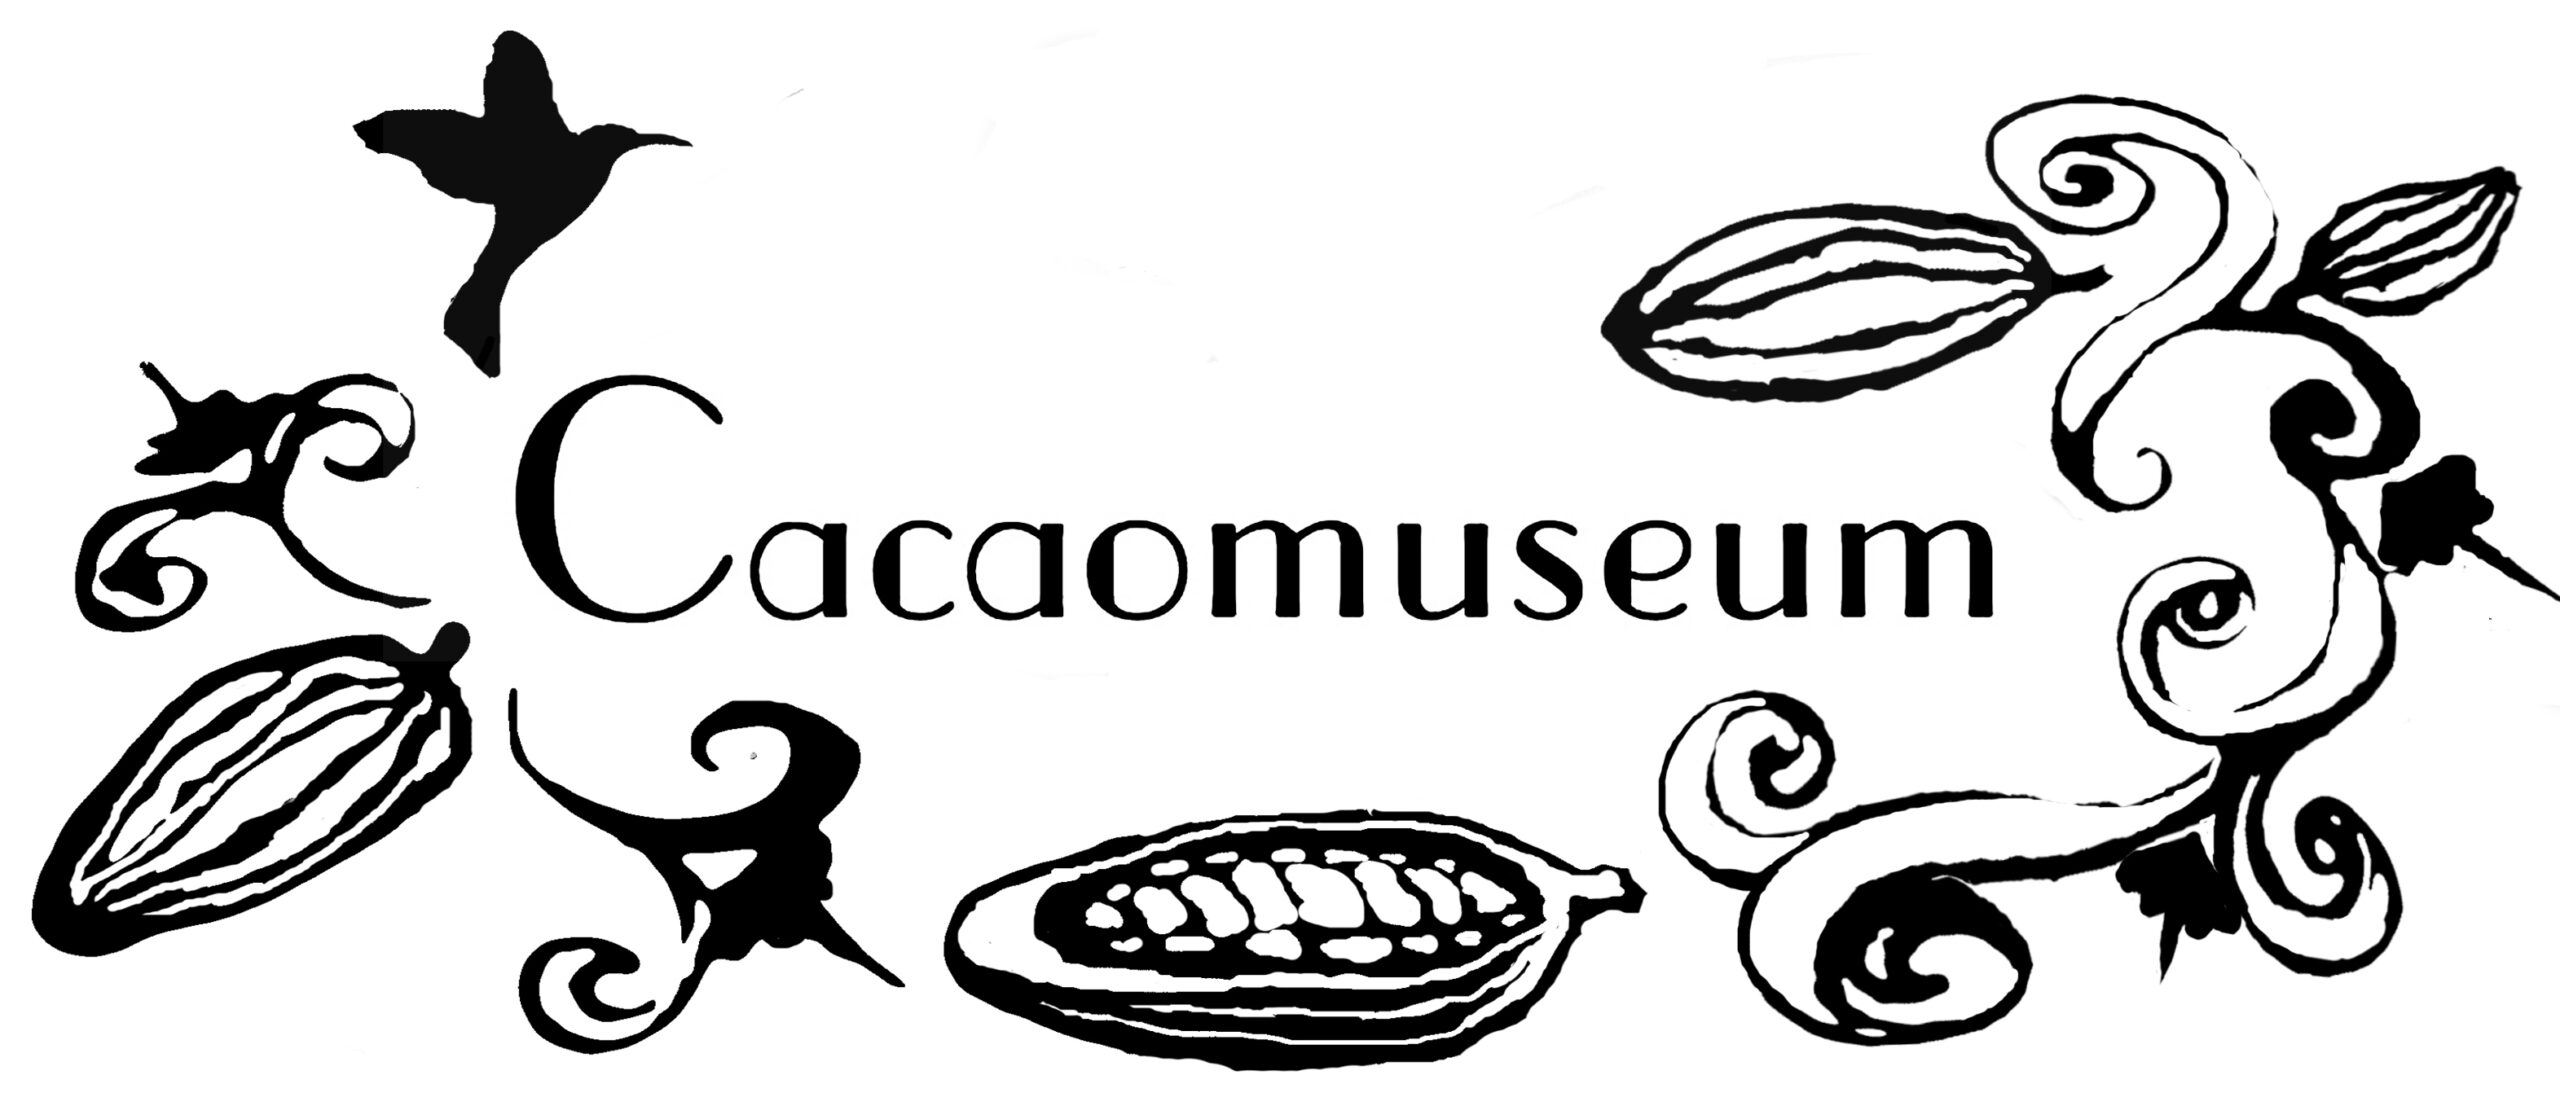 Cacao Museum